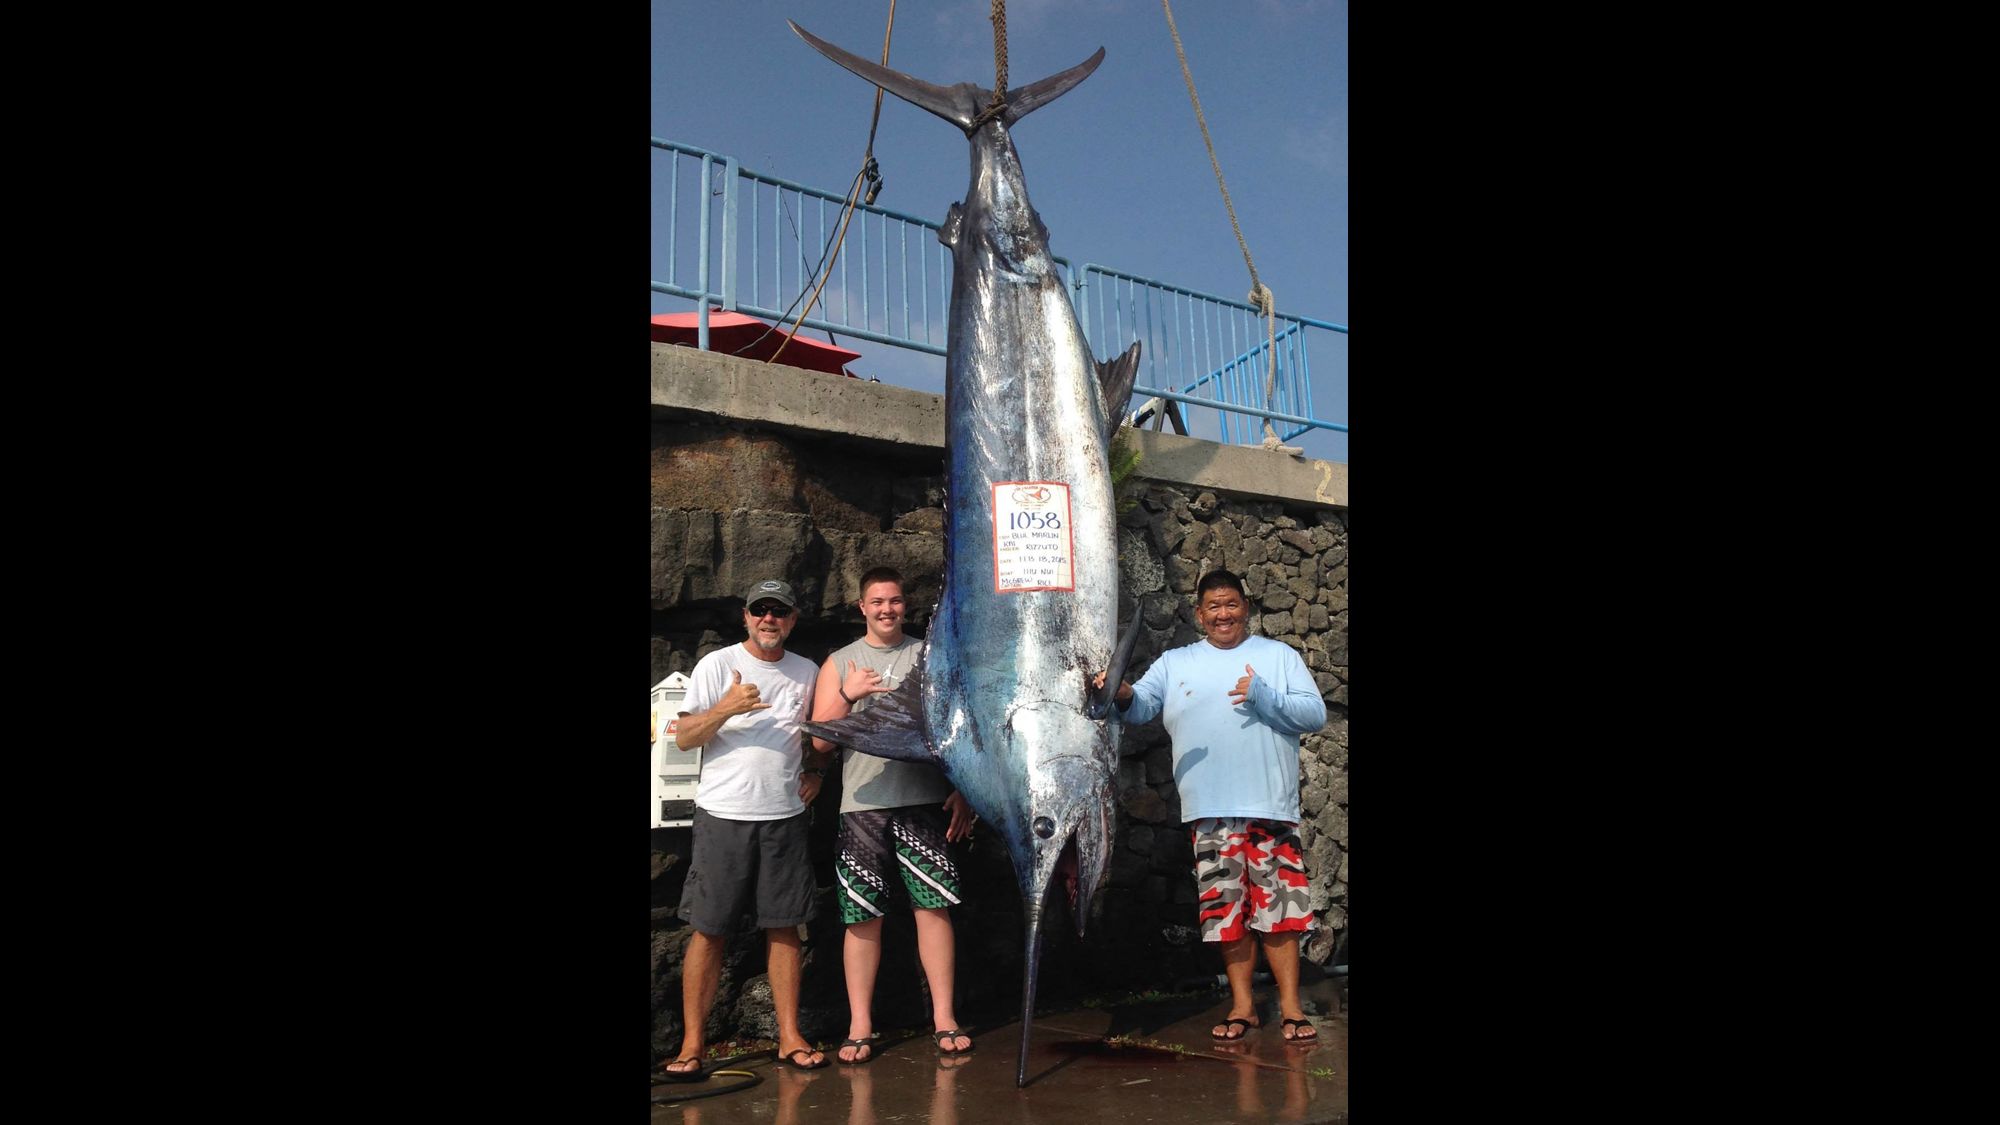 Teen catches 1,058-pound blue marlin off Hawaiian coast